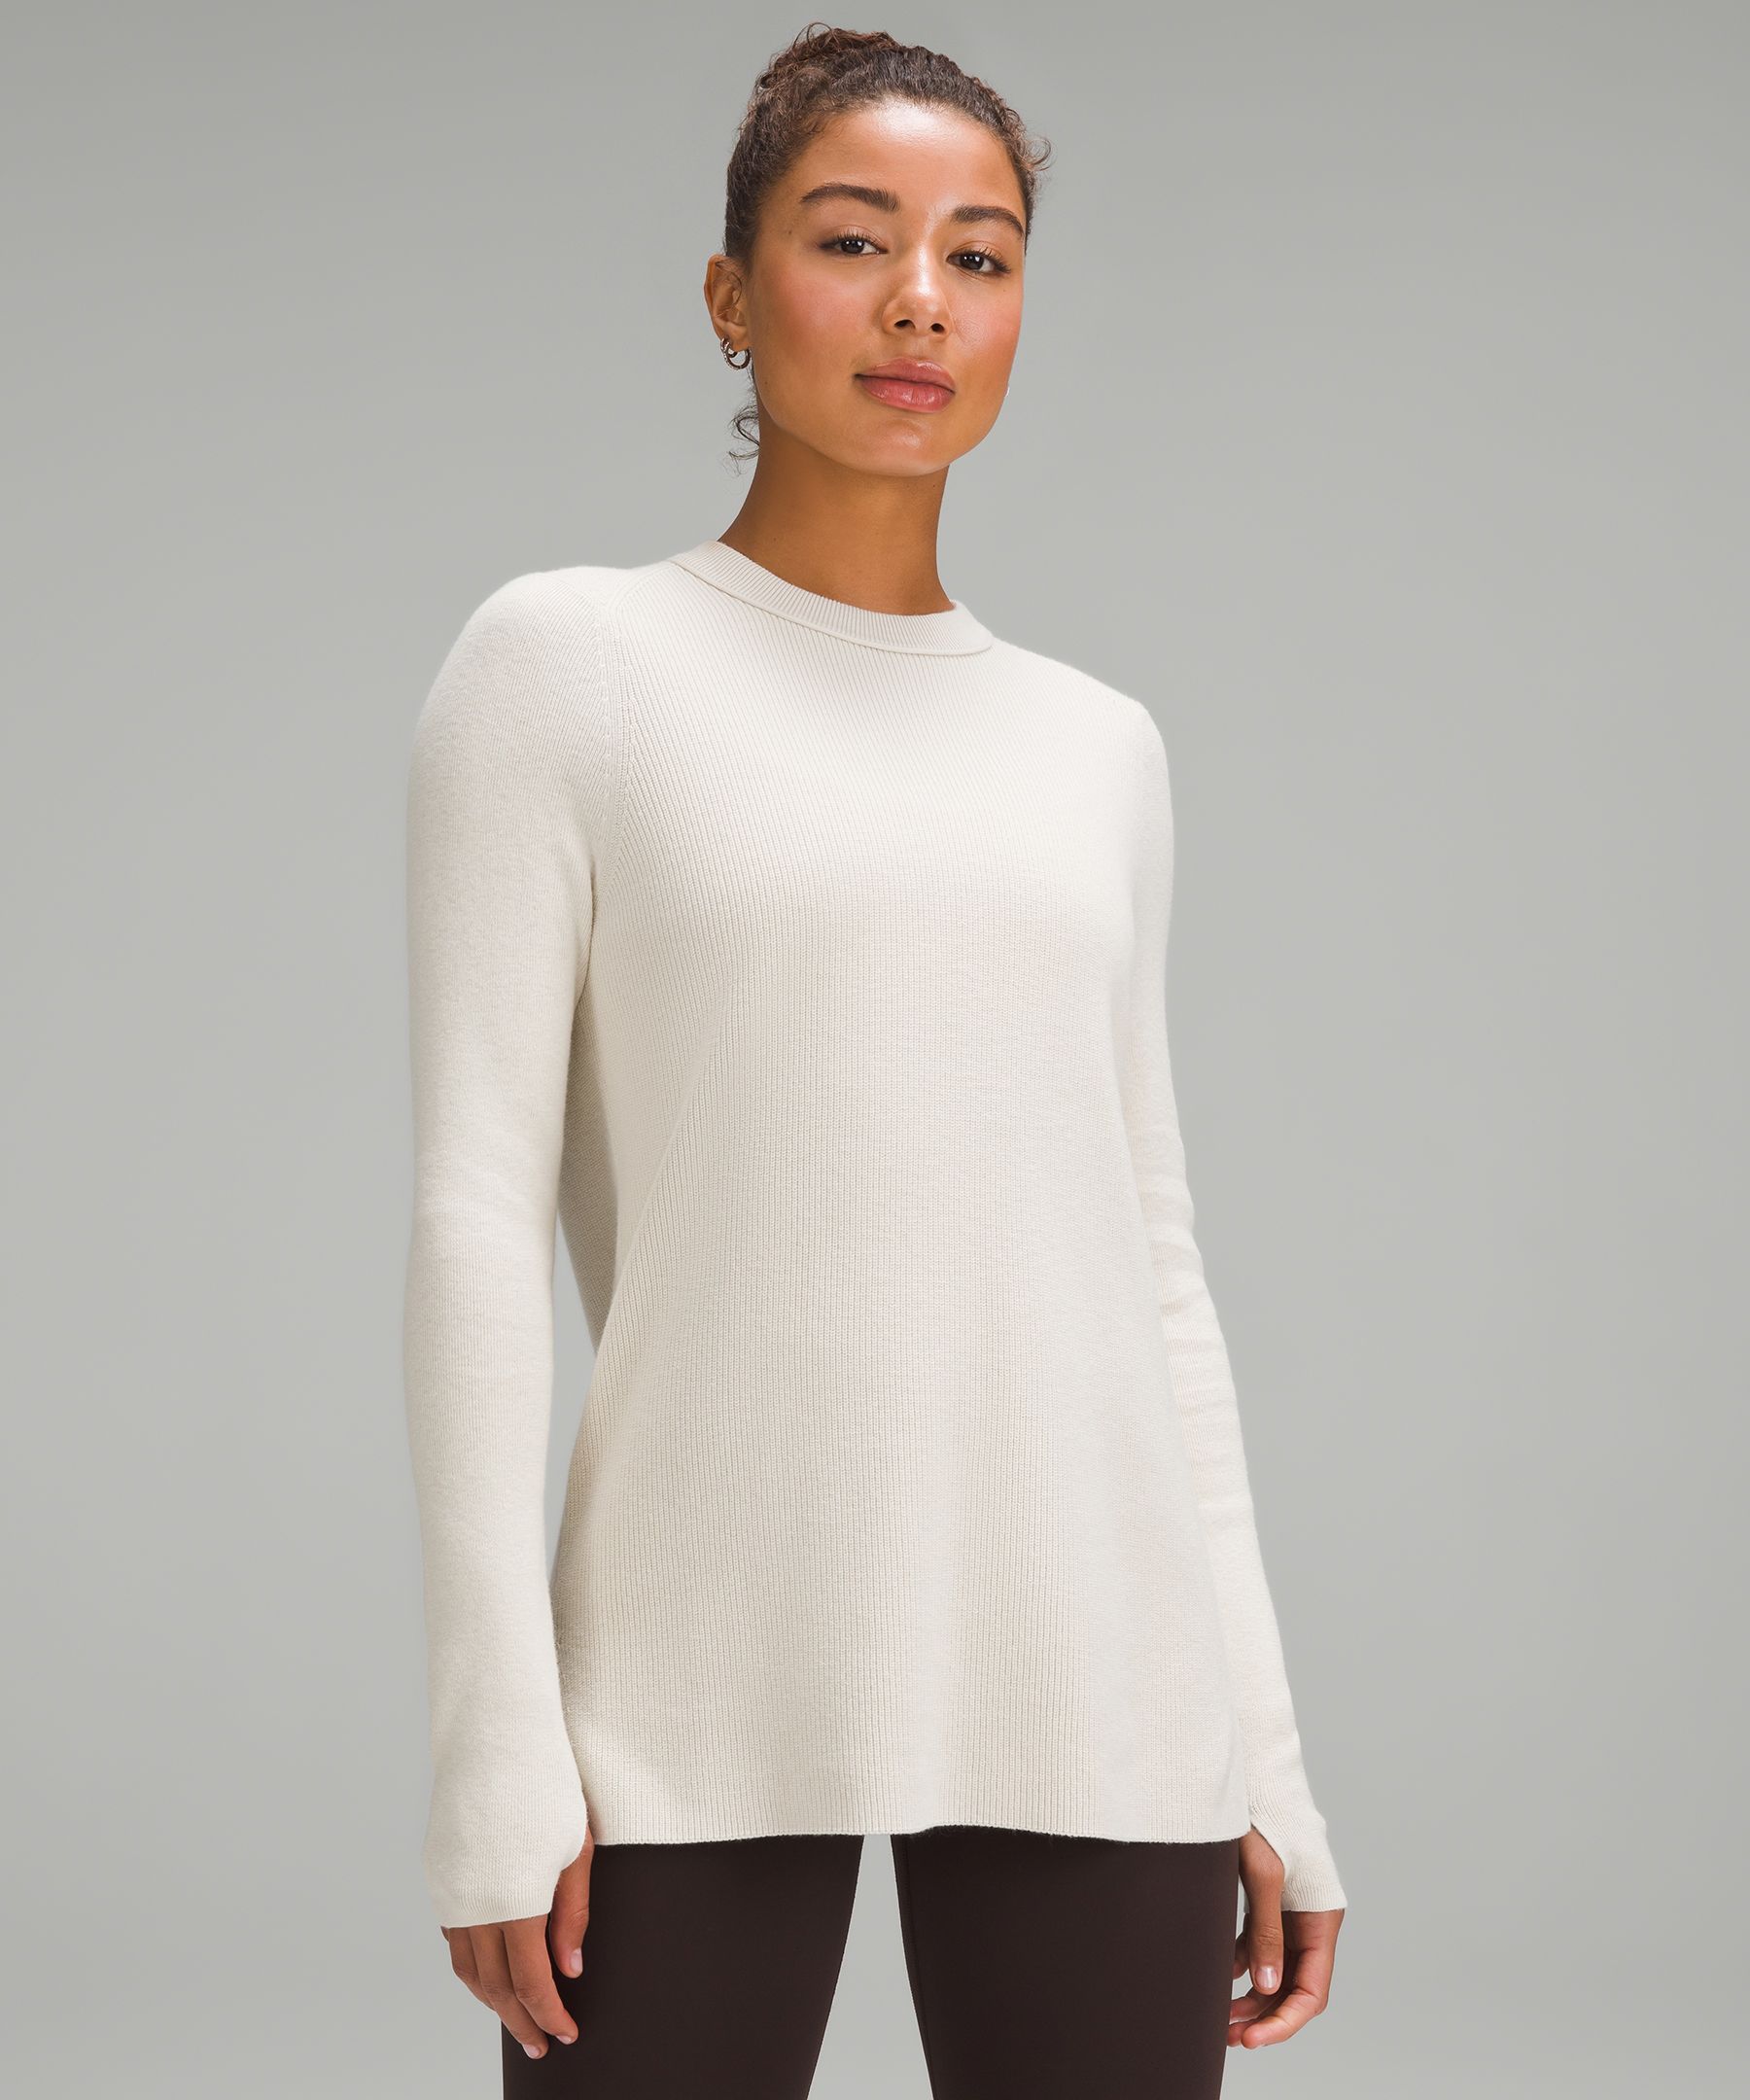 NWOT Lululemon Be Present Pullover - White / Aquamarine / Silver - Size 4/6/10